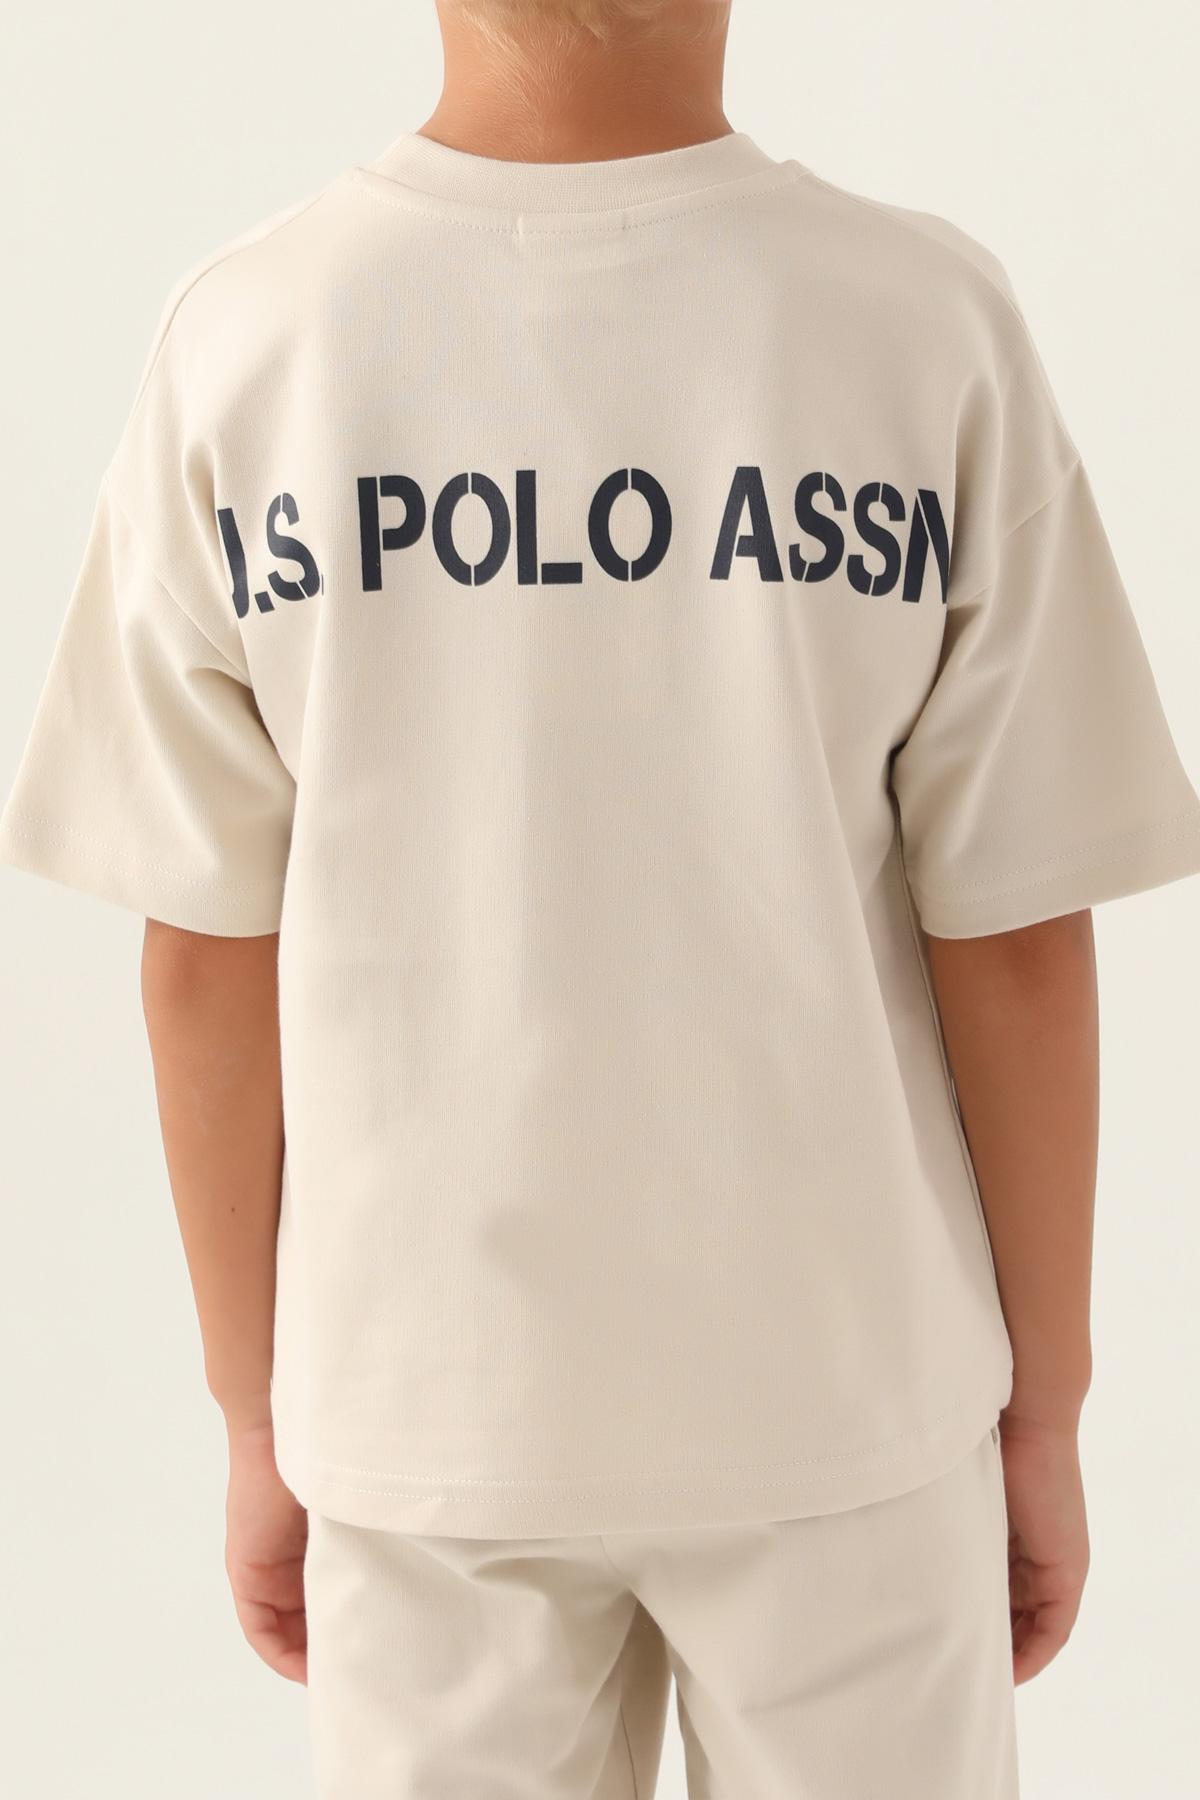 Selected image for U.S. Polo Assn. Komplet za dečake US1774-G, Bež